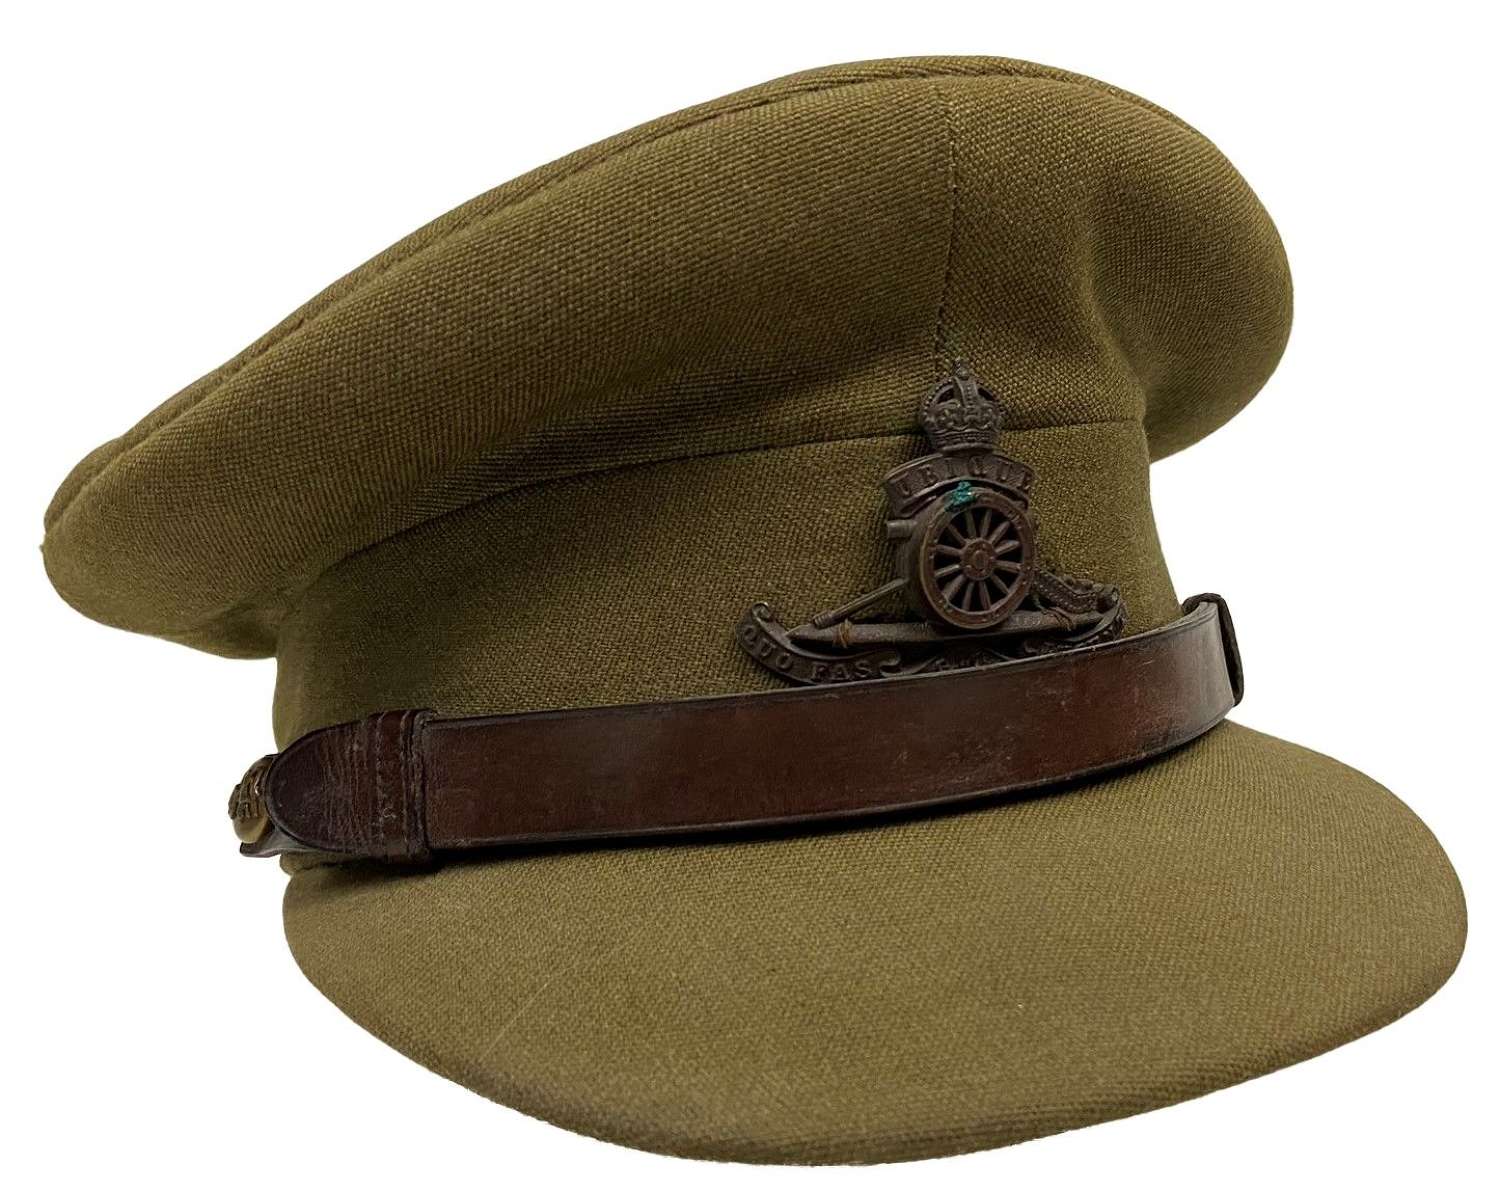 Original 1950s British Army Officers Peaked Cap by 'Herbert Johnson'